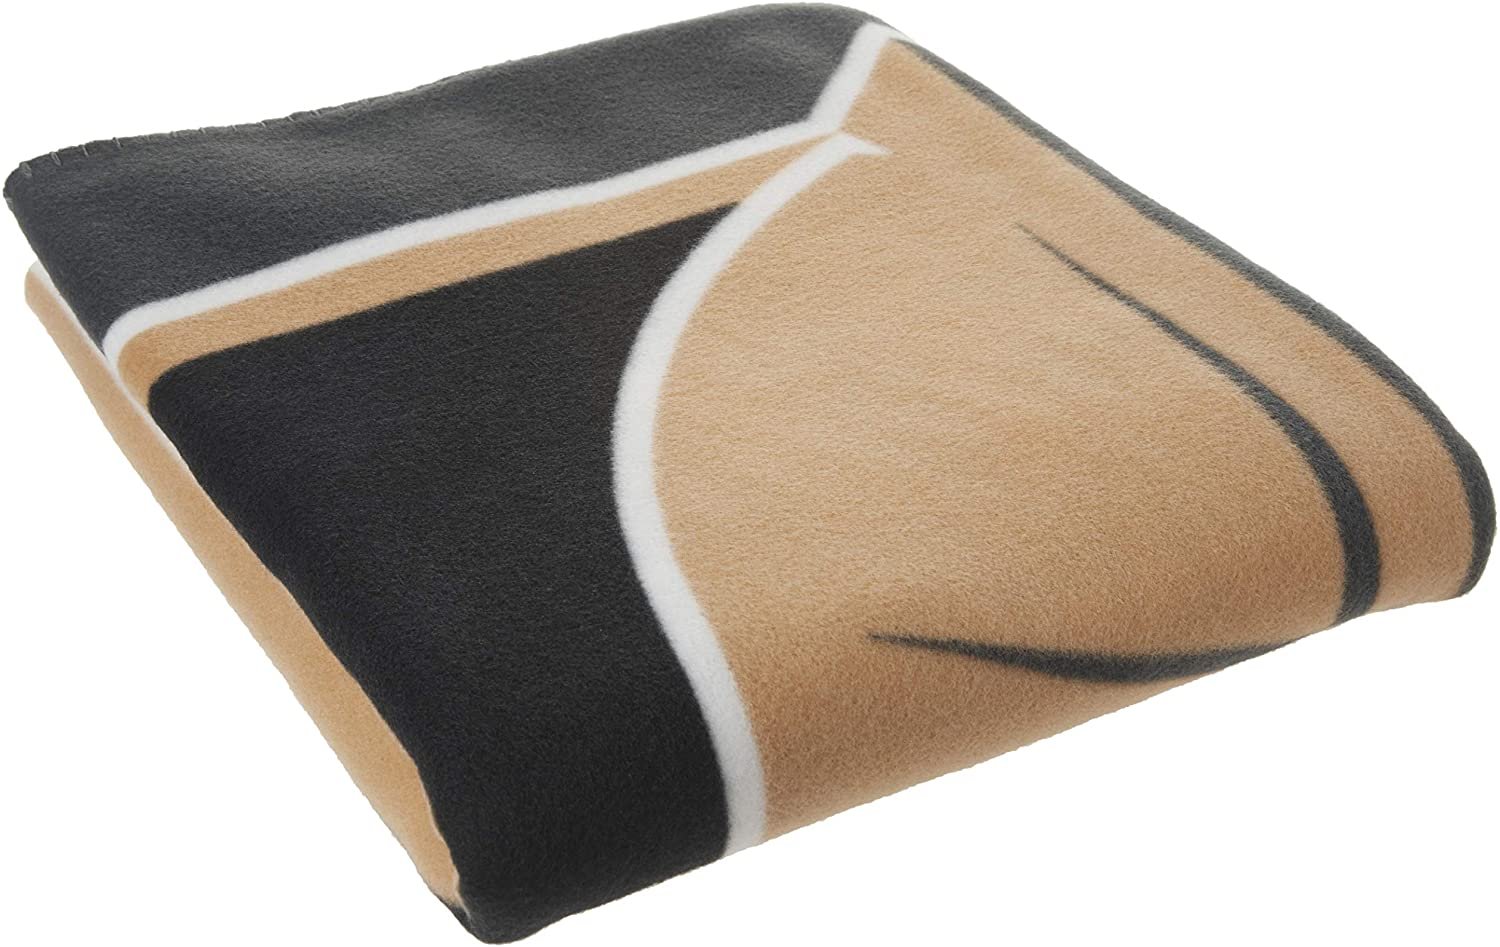 Las Vegas Golden Knights Fleece Throw Blanket, 50x60 Inch, Fade Design, Lightweight